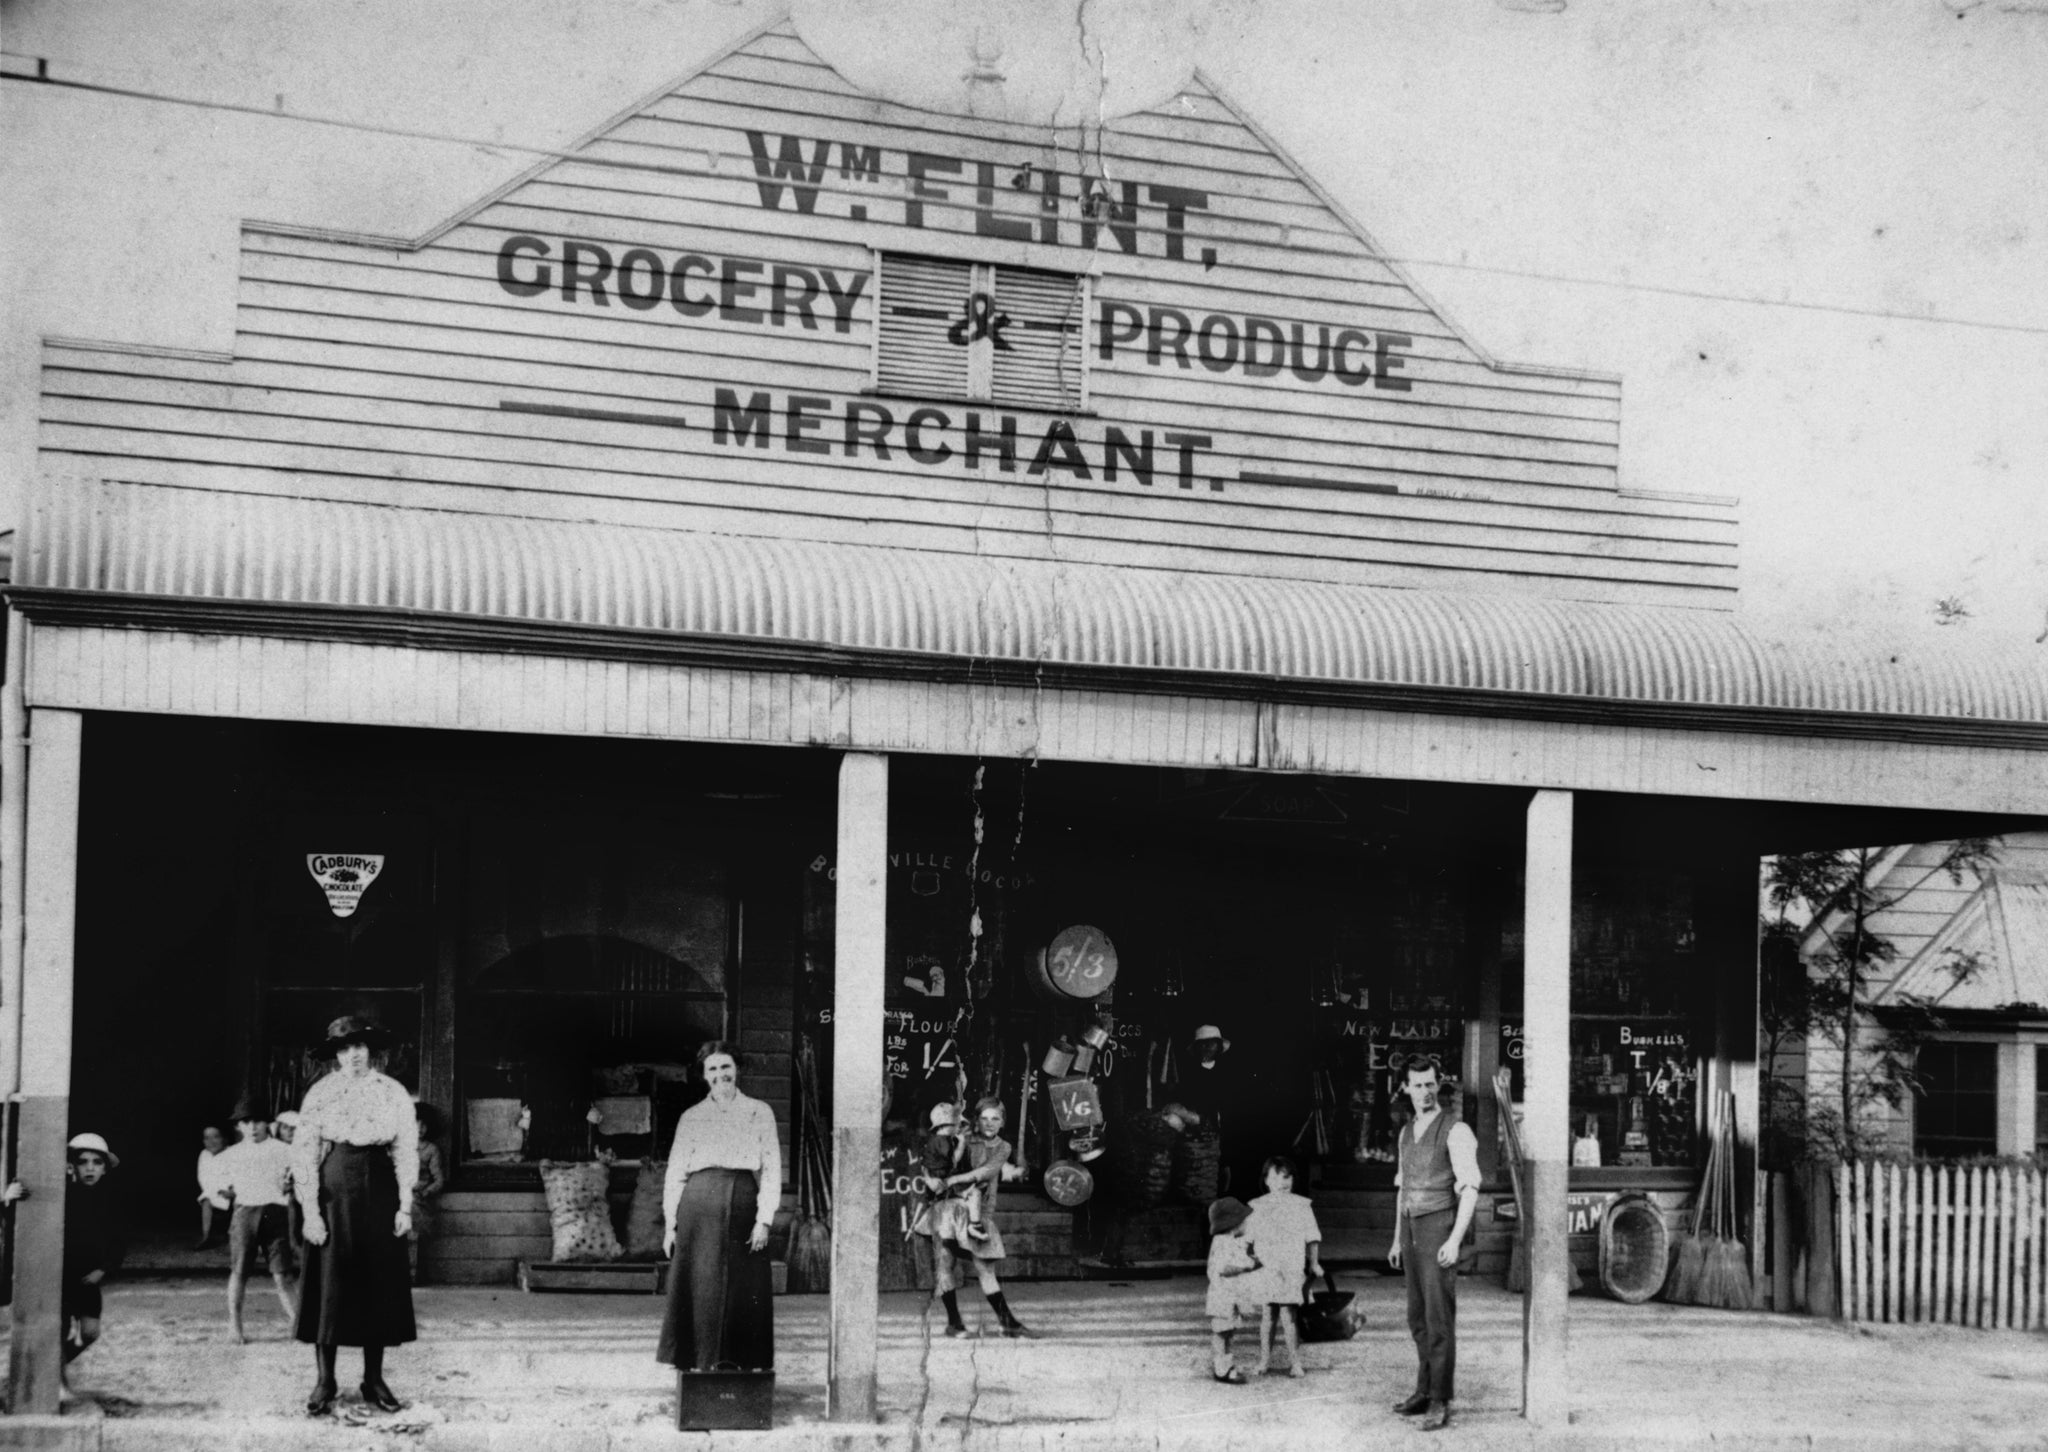 William Flint Grocery & Produce Merchant, Paddington 1915